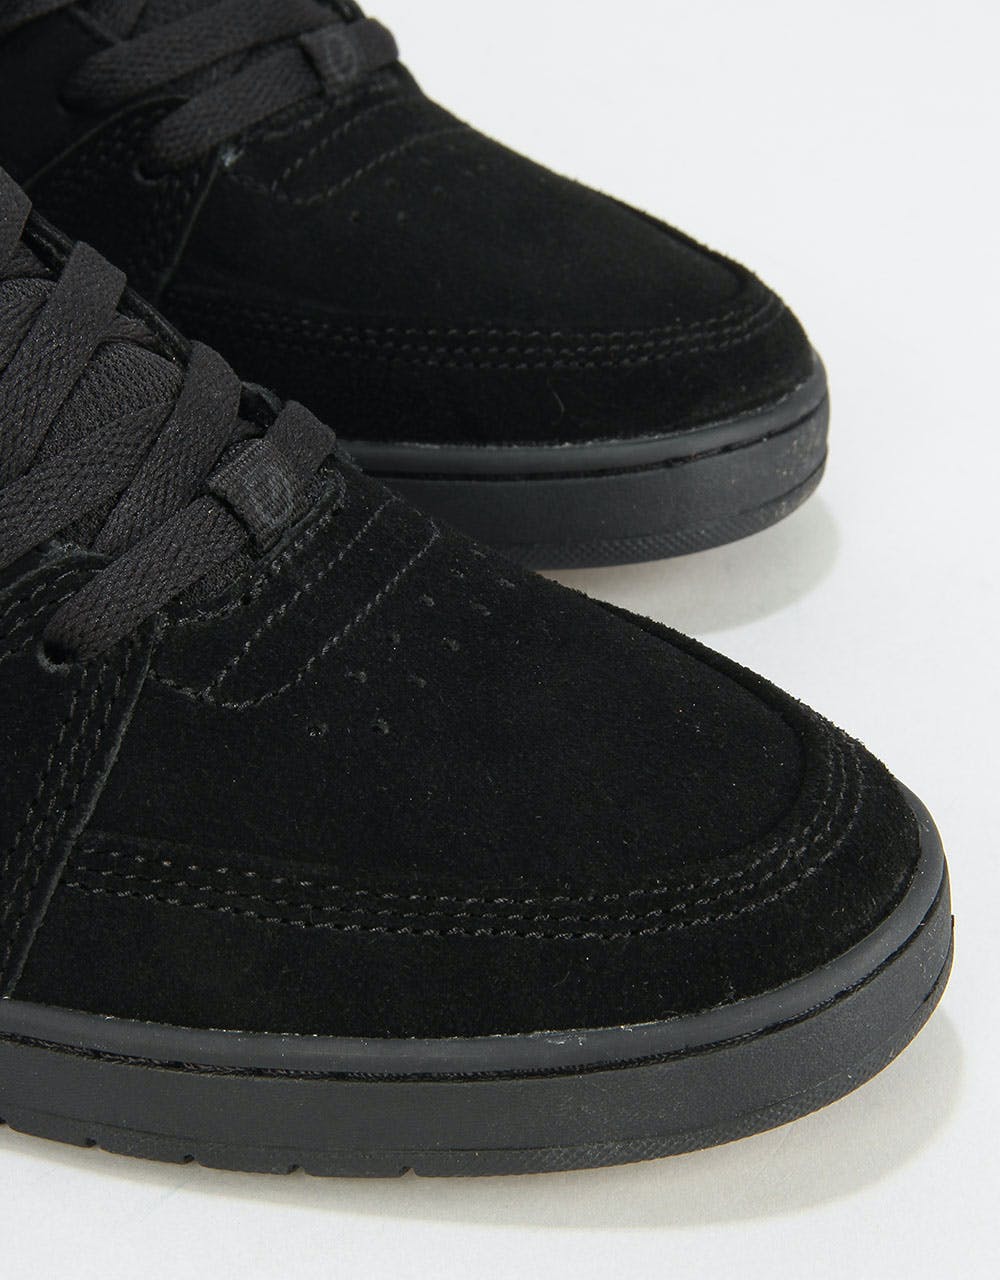 éS Accel Slim Skate Shoes - Black/Black/Black